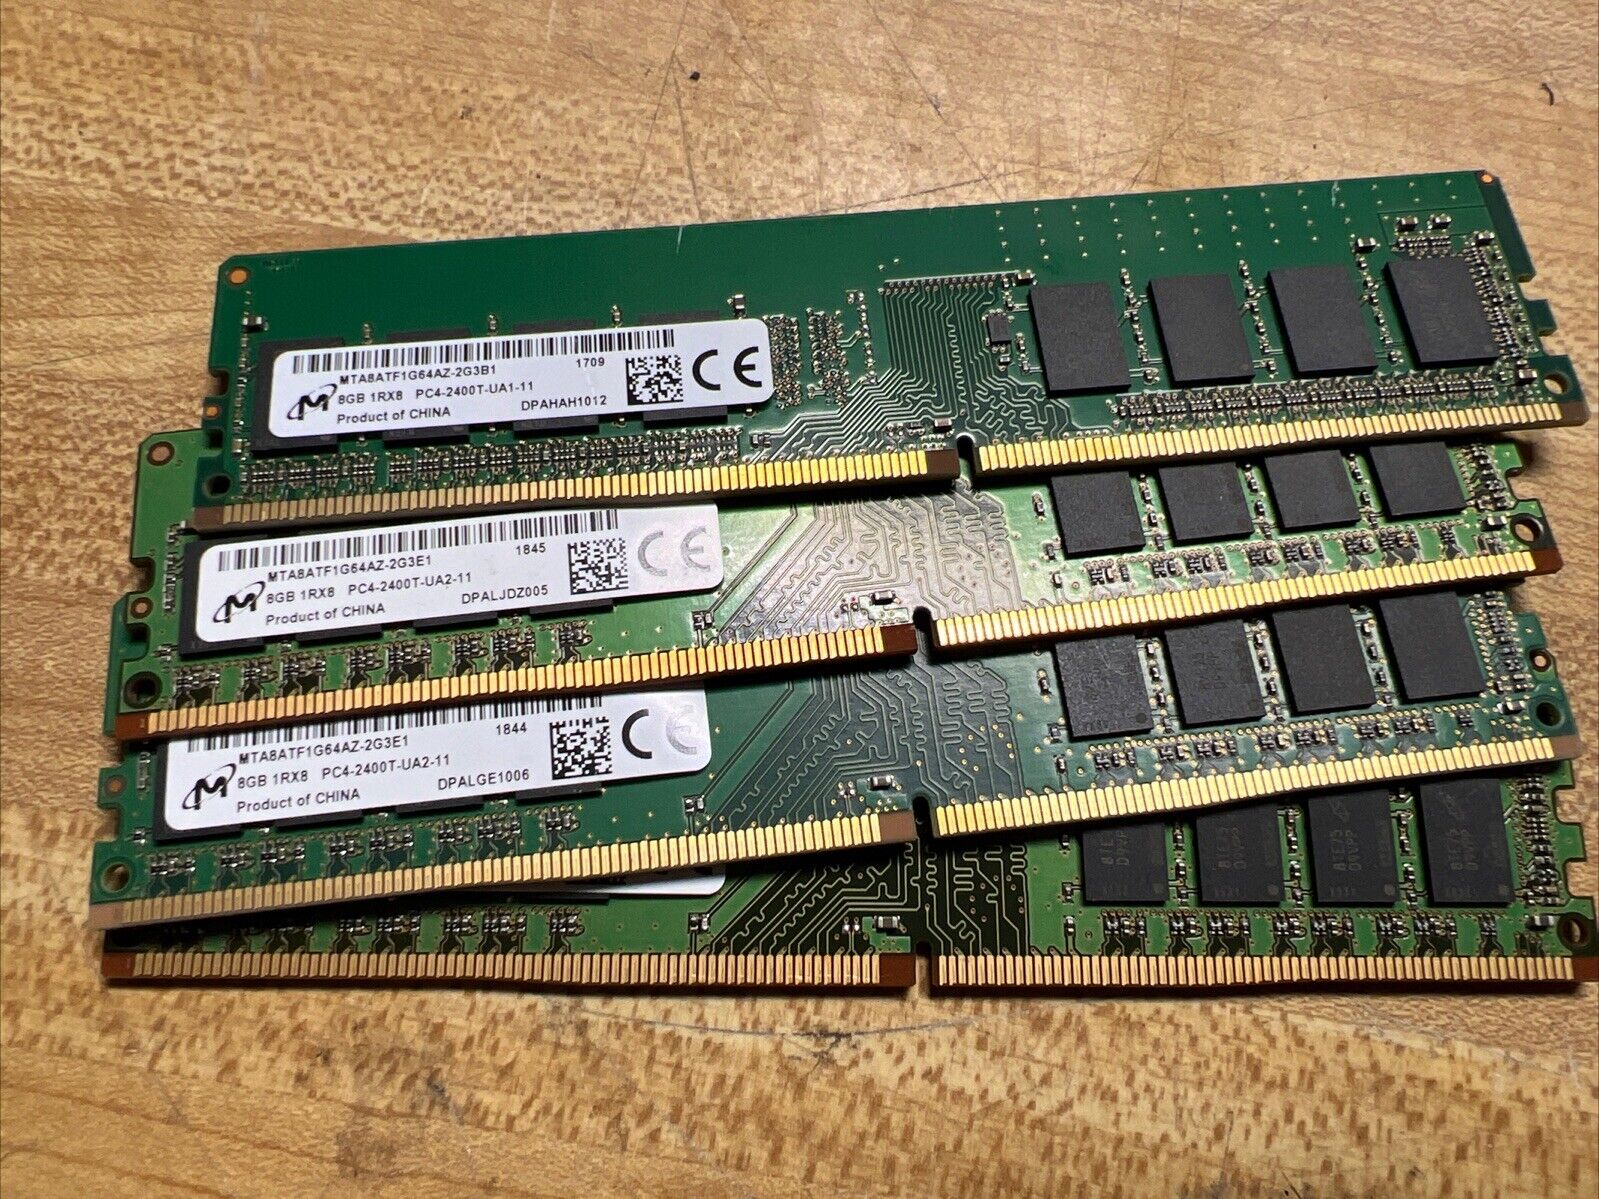 LOT OF 4 Micron 8GB DDR4 SDRAM UDIMM Memory Module (MTA8ATF1G64AZ-2G3B1)